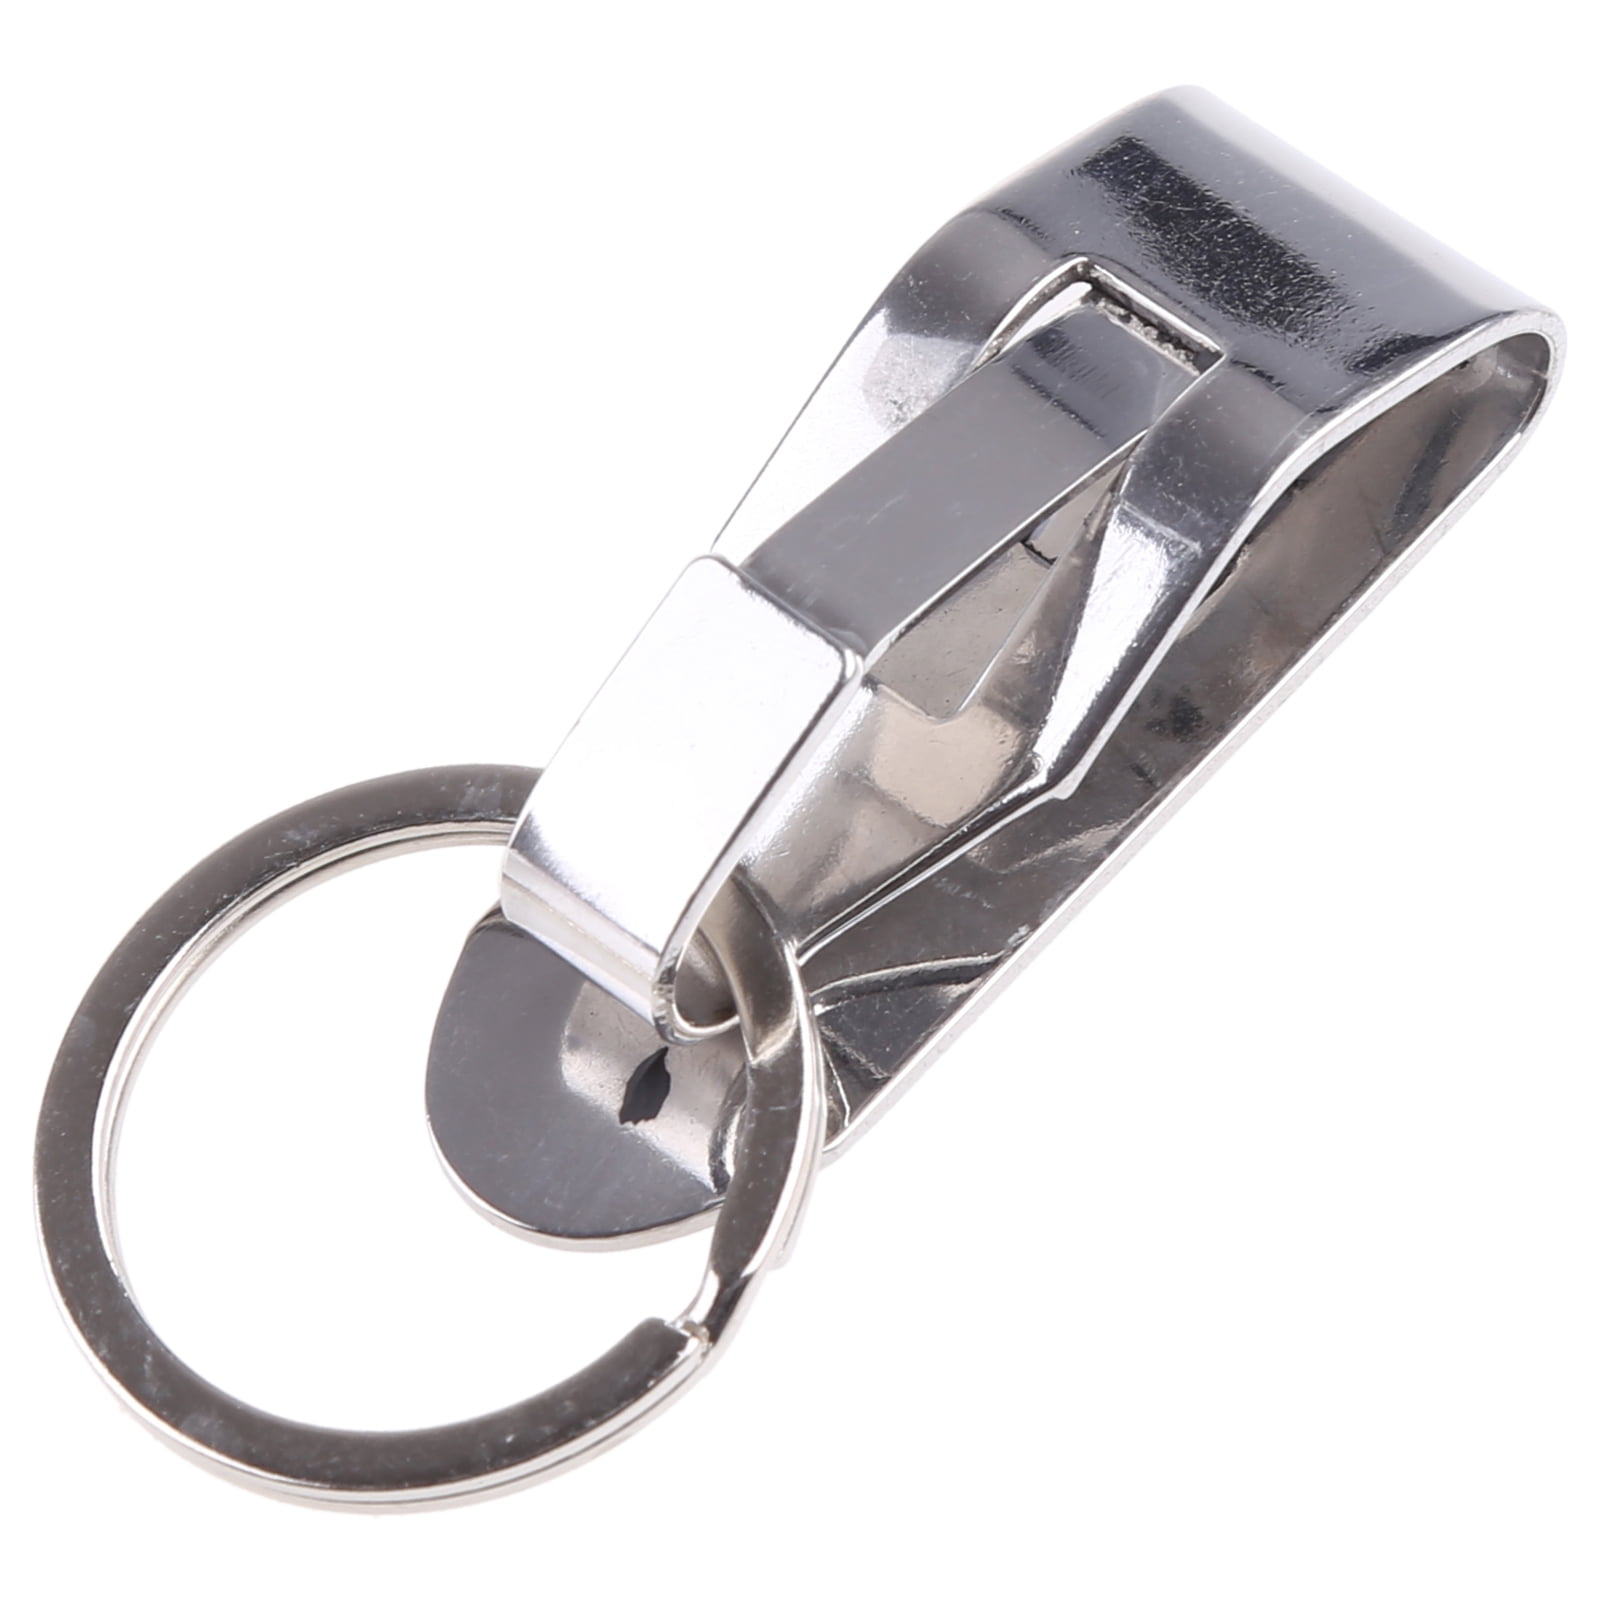 Stainless Steel Quick Release Detachable Key Chain Belt Clip Holder For Car Keys 